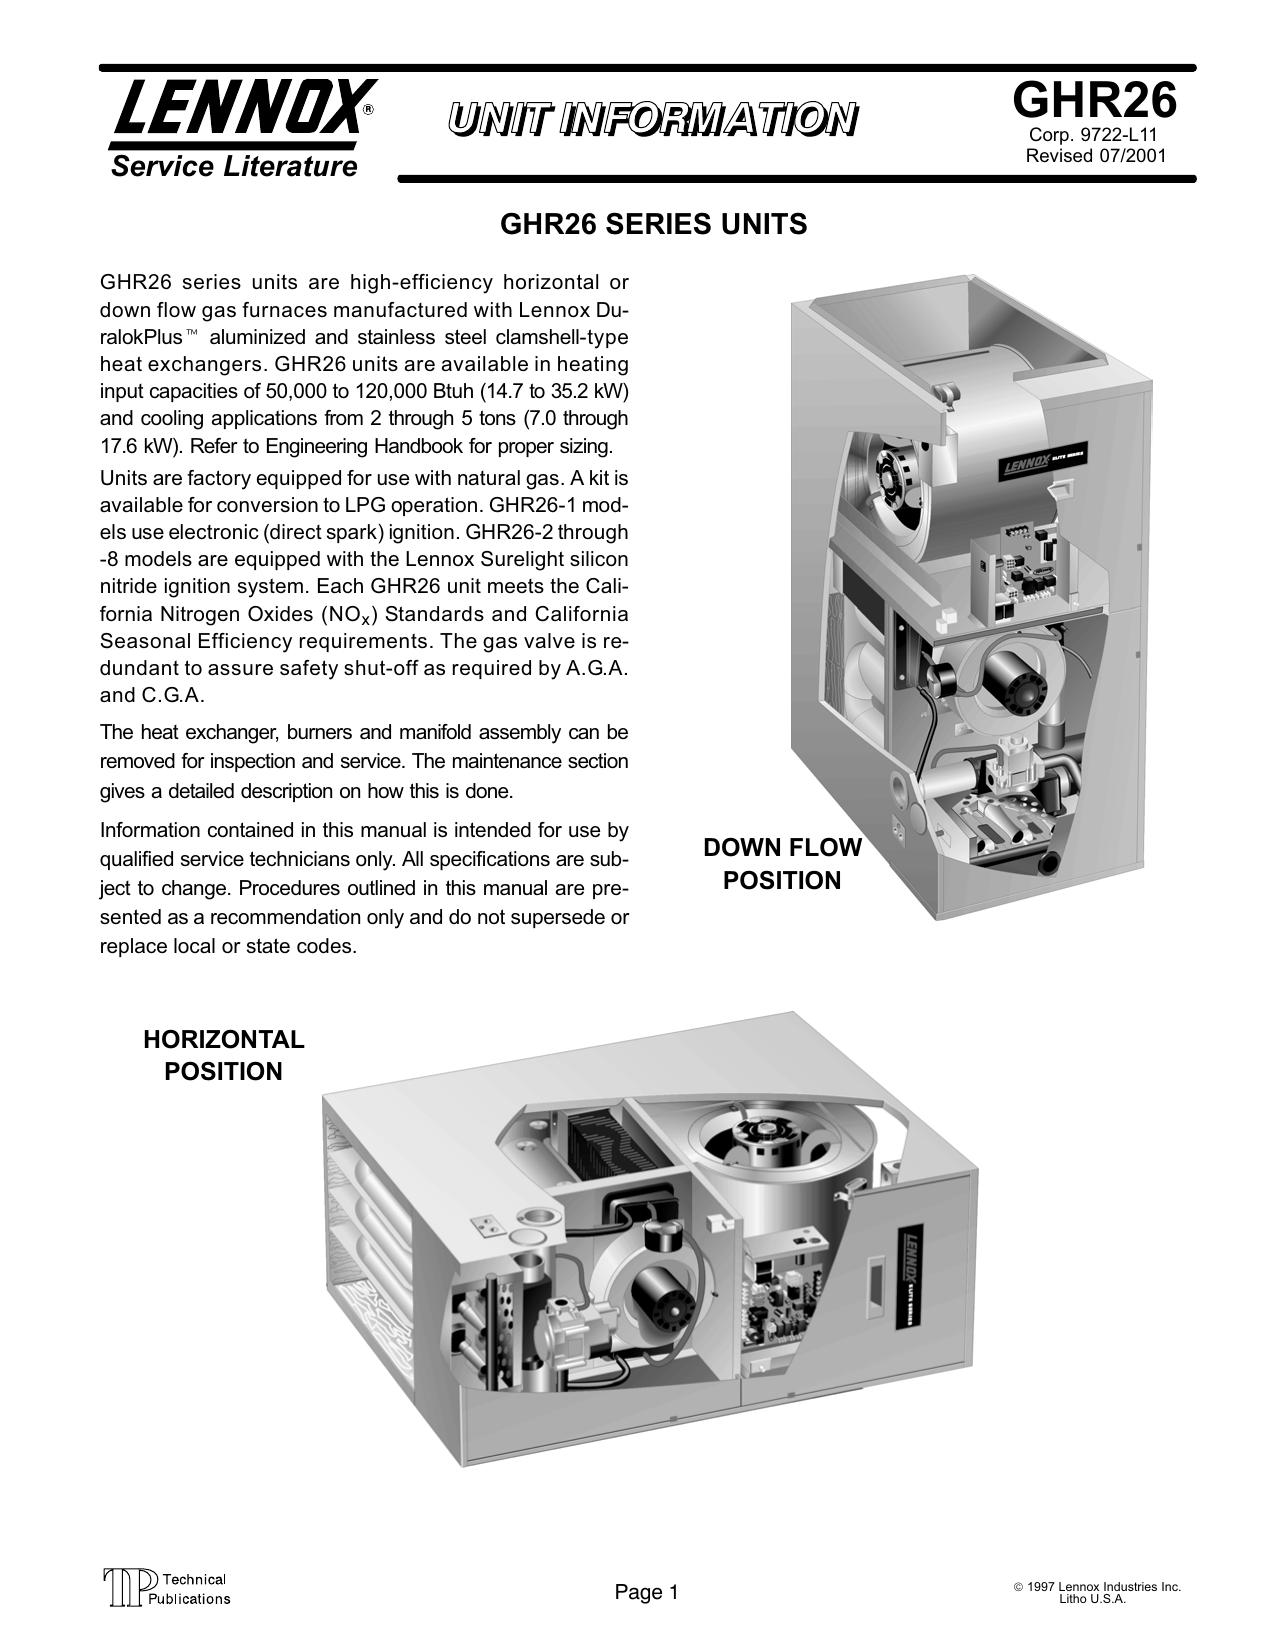 lennox furnace parts catalog